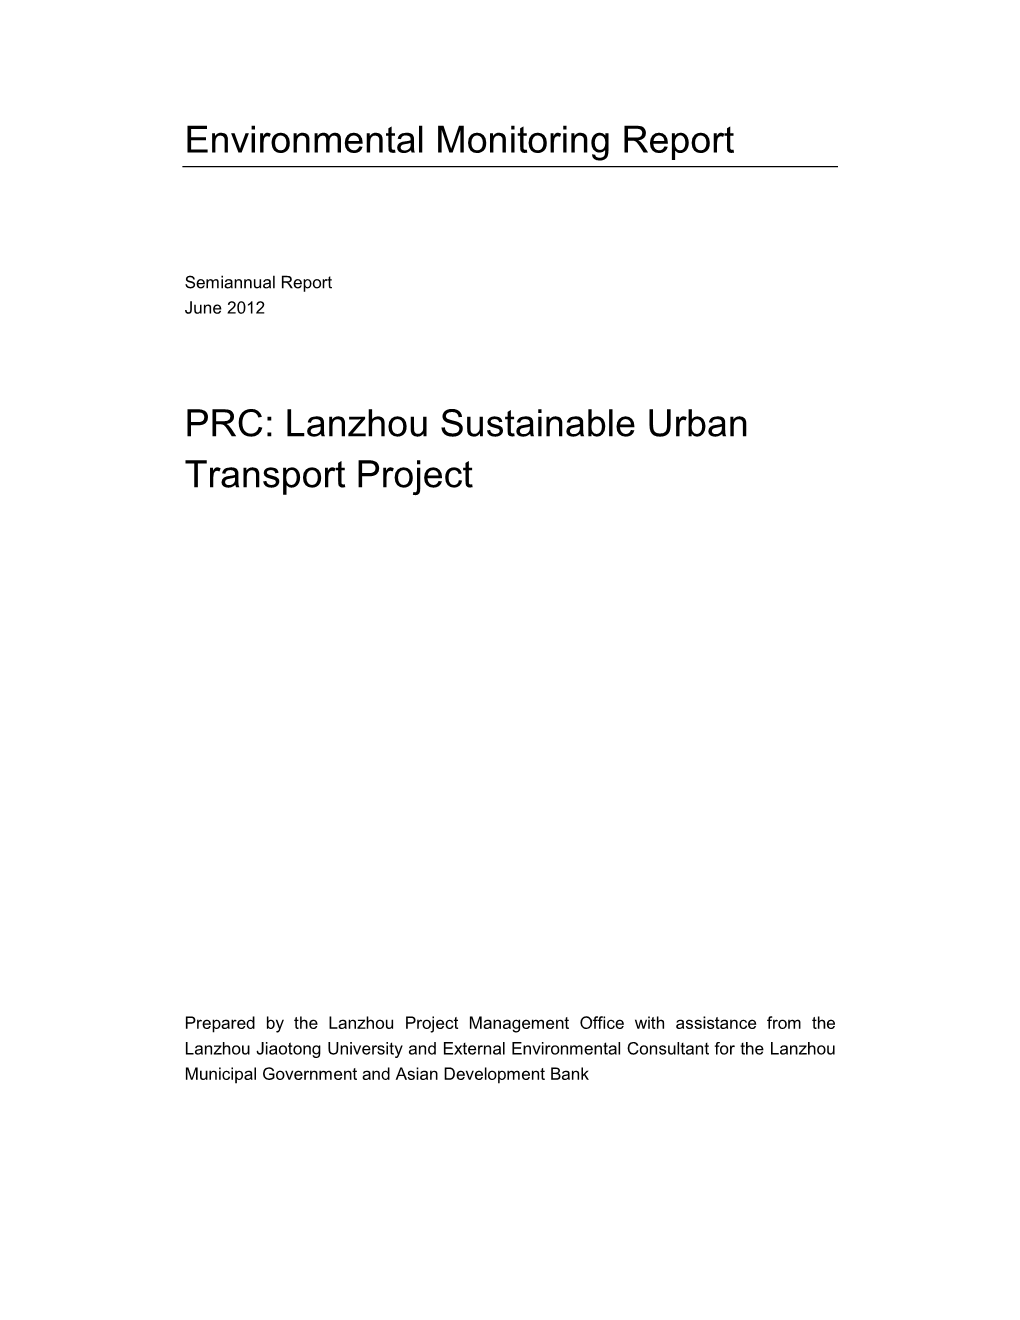 Environmental Monitoring Report PRC: Lanzhou Sustainable Urban